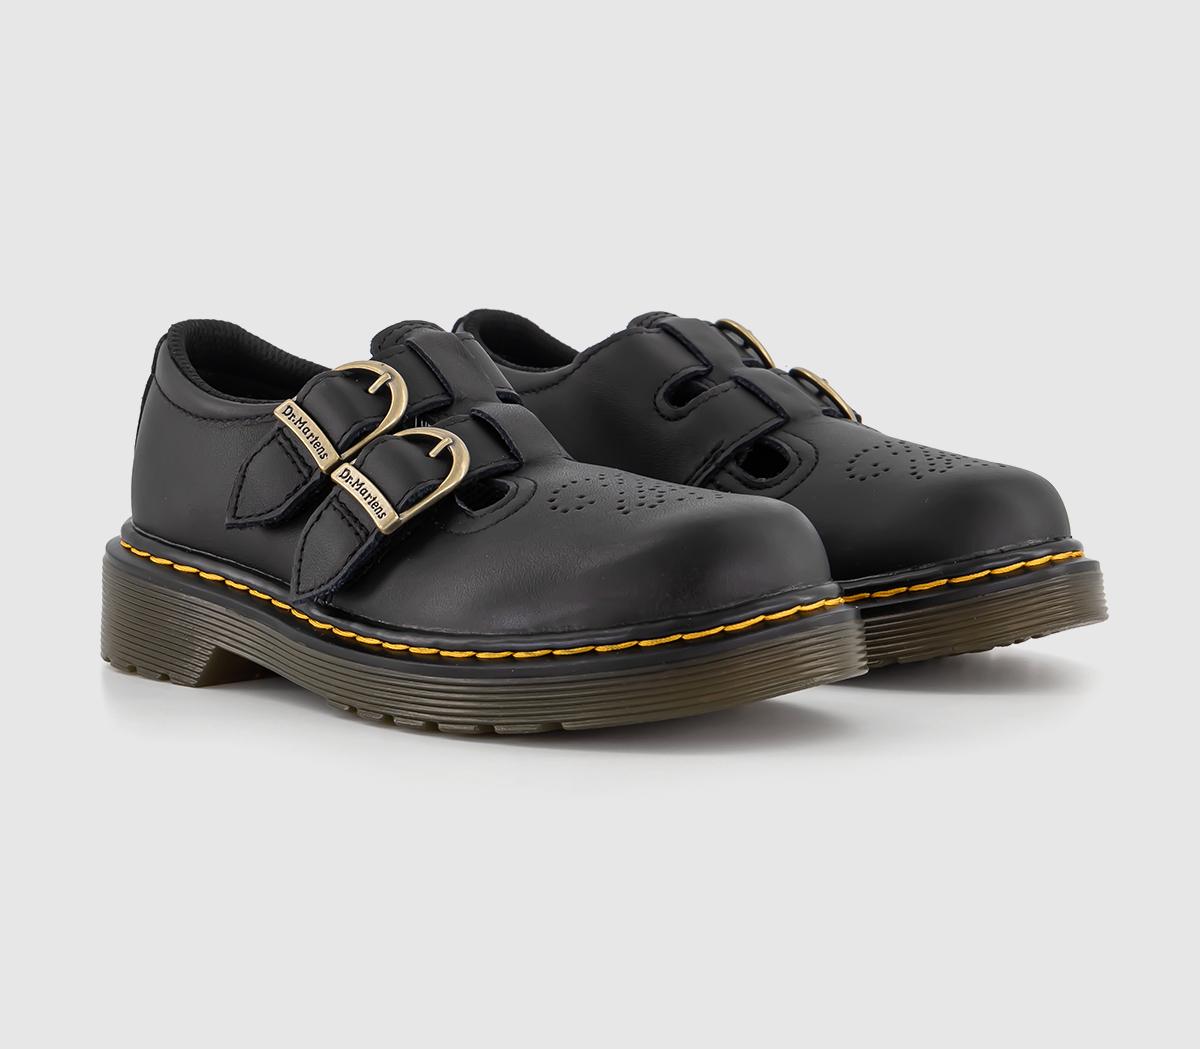 Dr. Martens 8065 Junior Shoes Black, 10 Youth